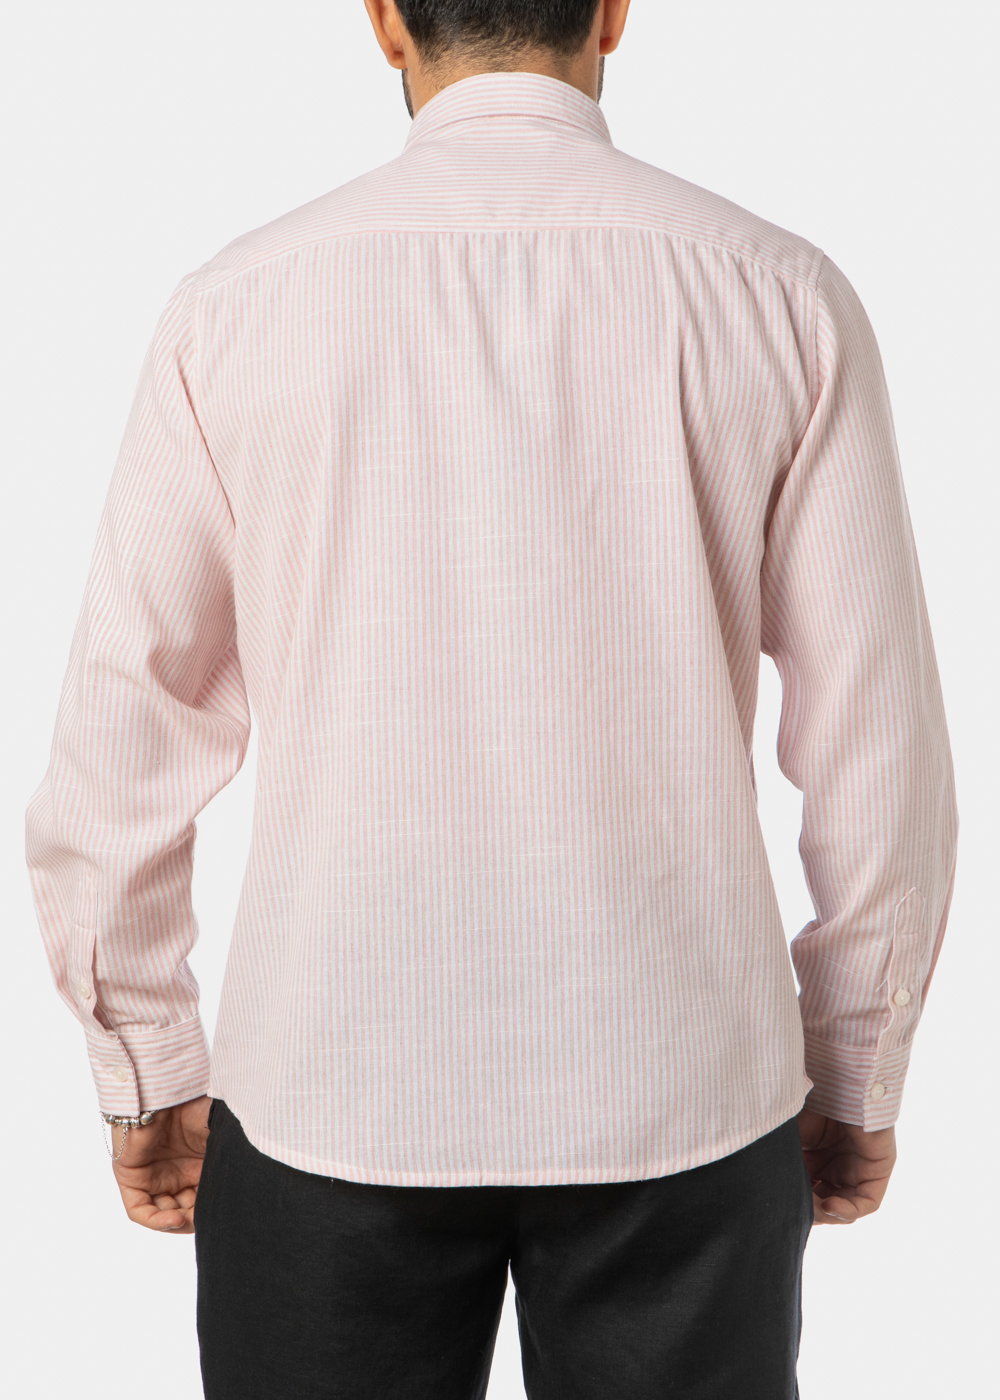 Pink Striped Classic Shirt